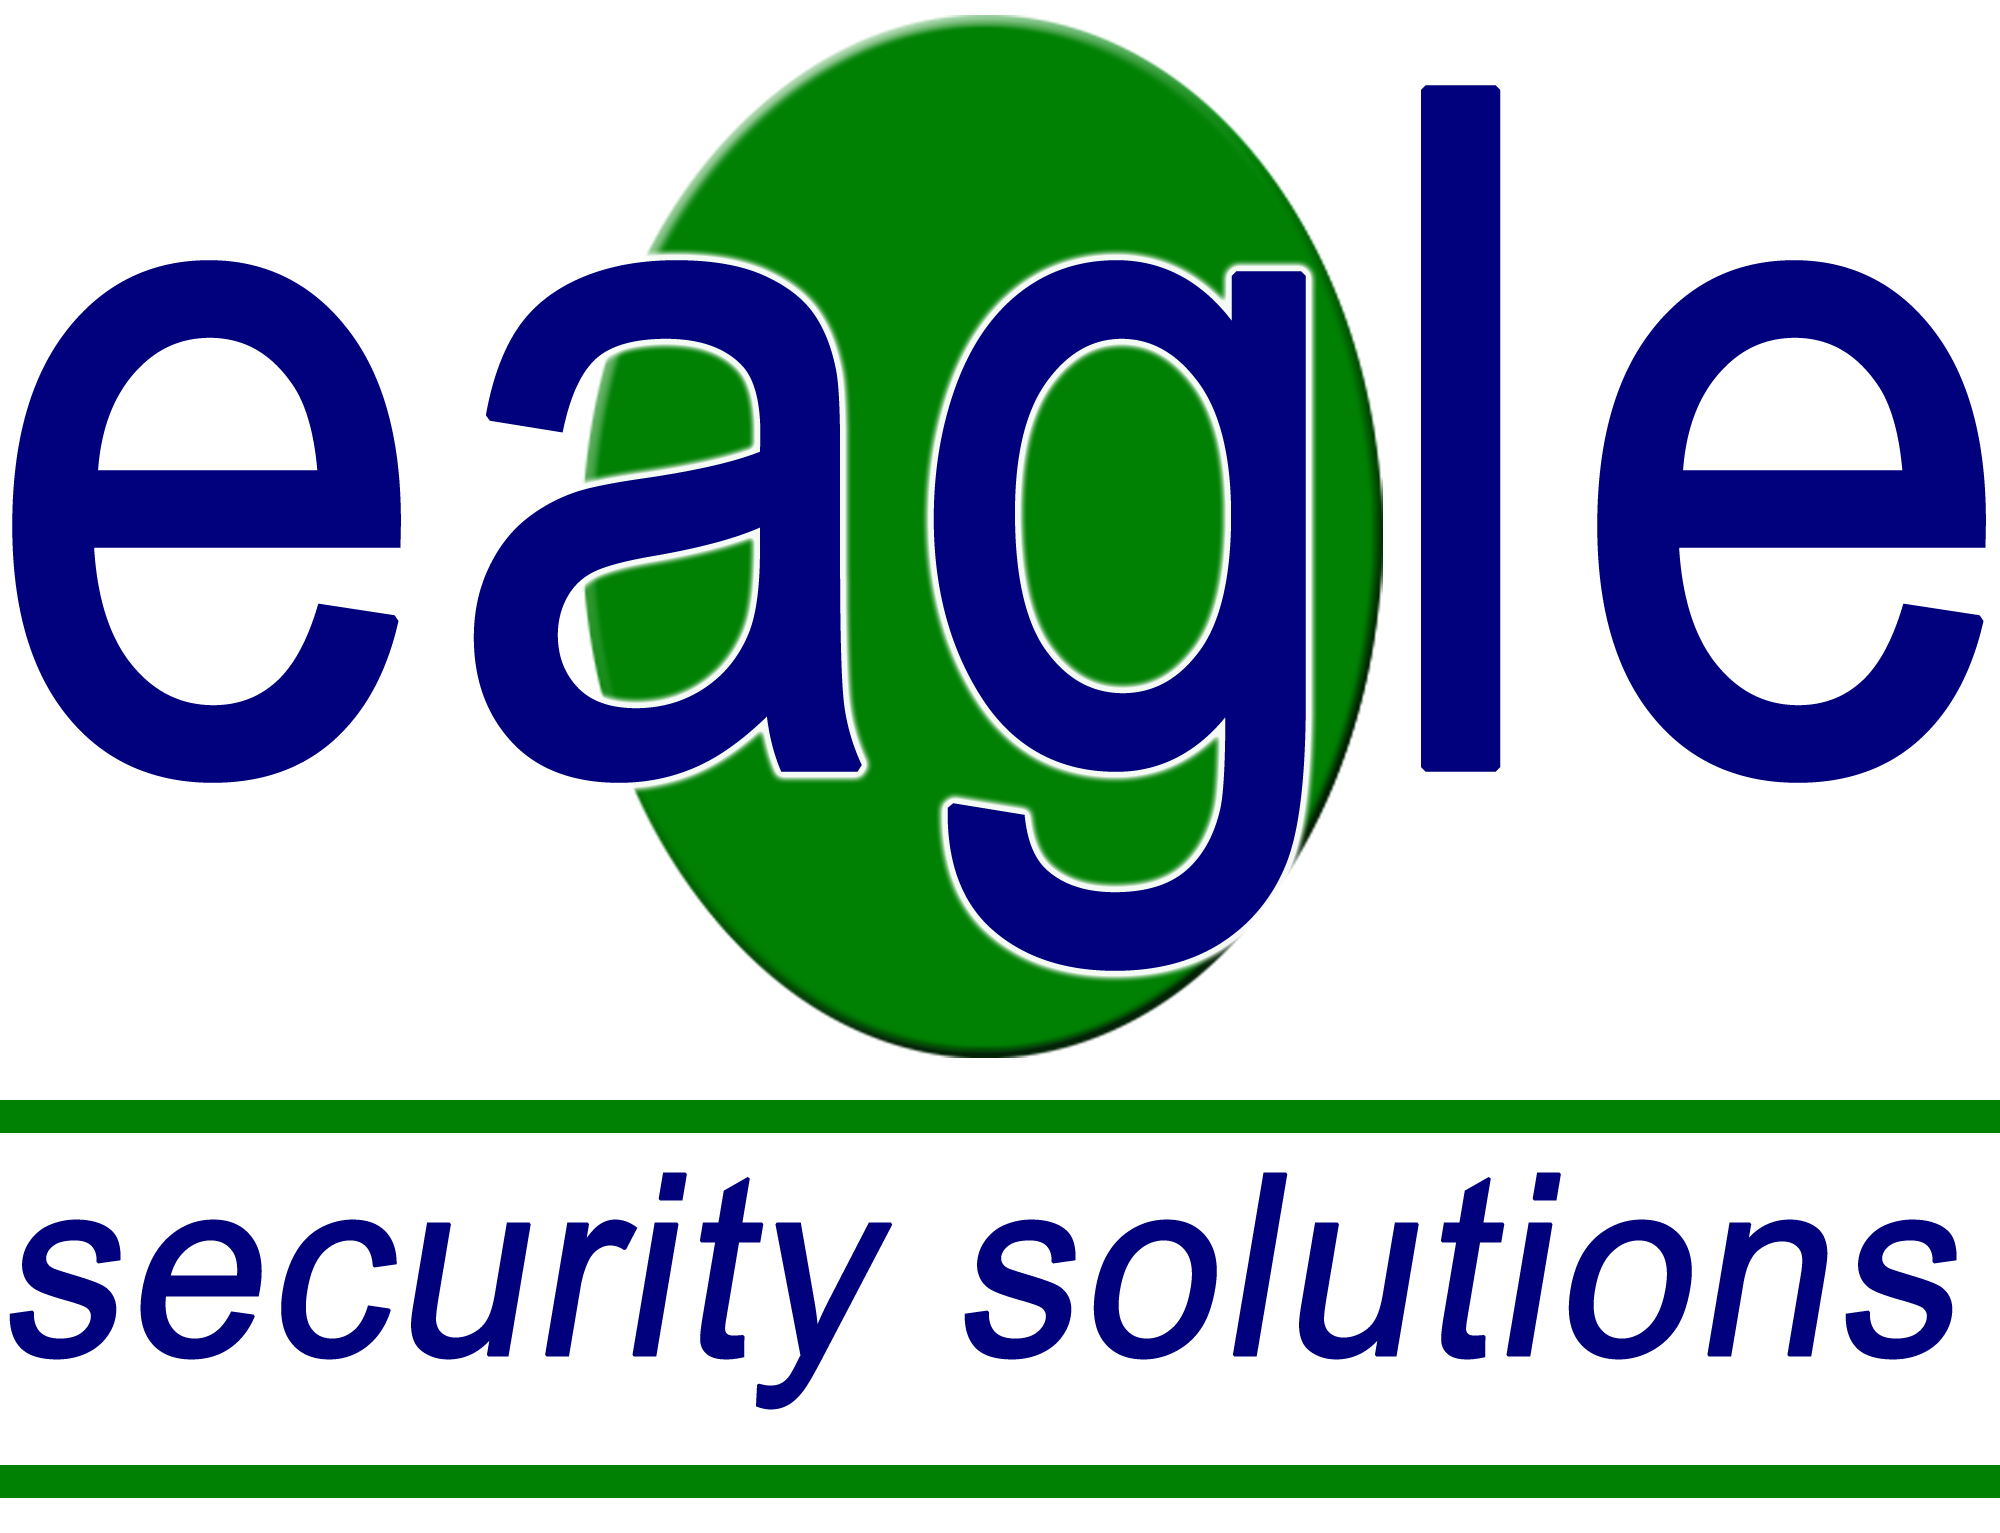 Eagle Security Solutions Ltd